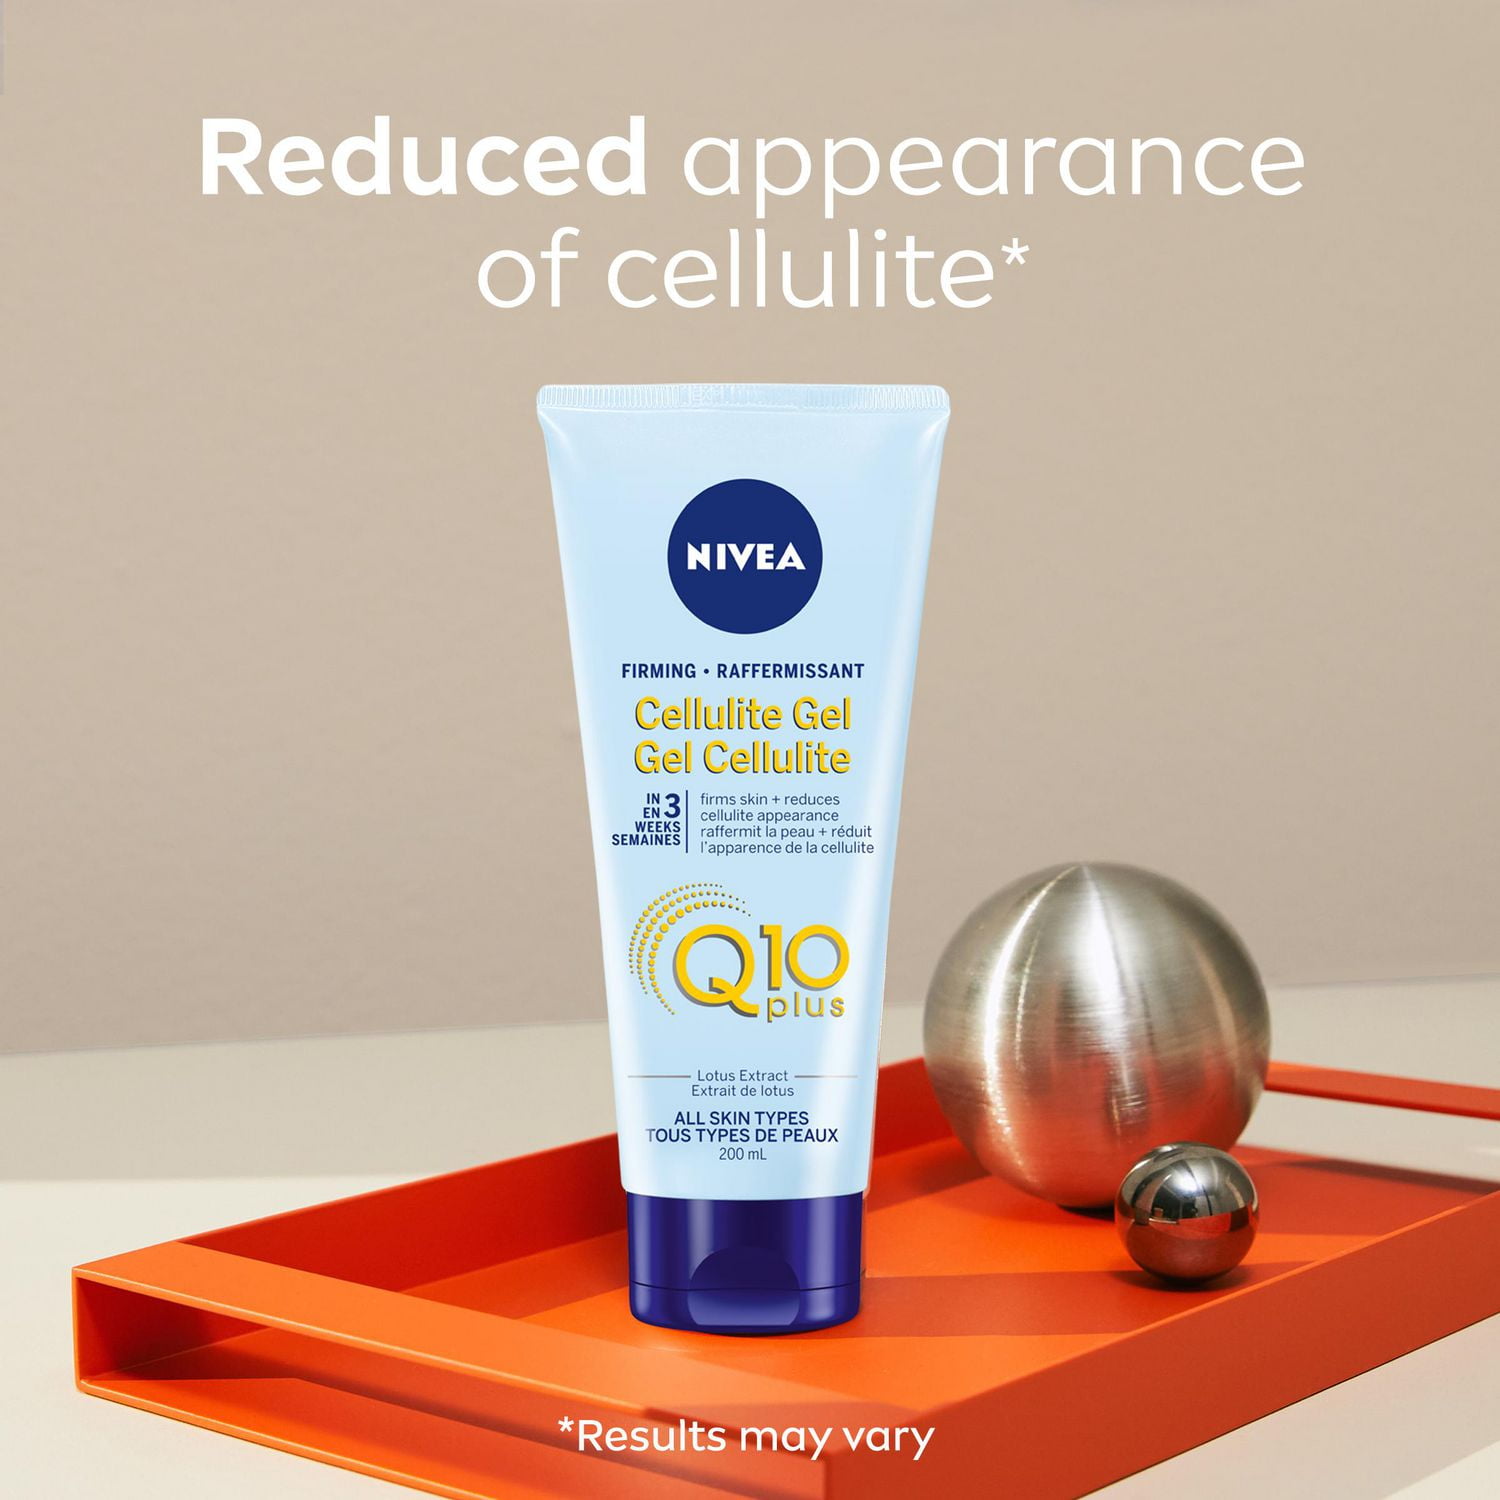 NIVEA Q10 plus Firming Cellulite Gel, Firming Cellulite Gel